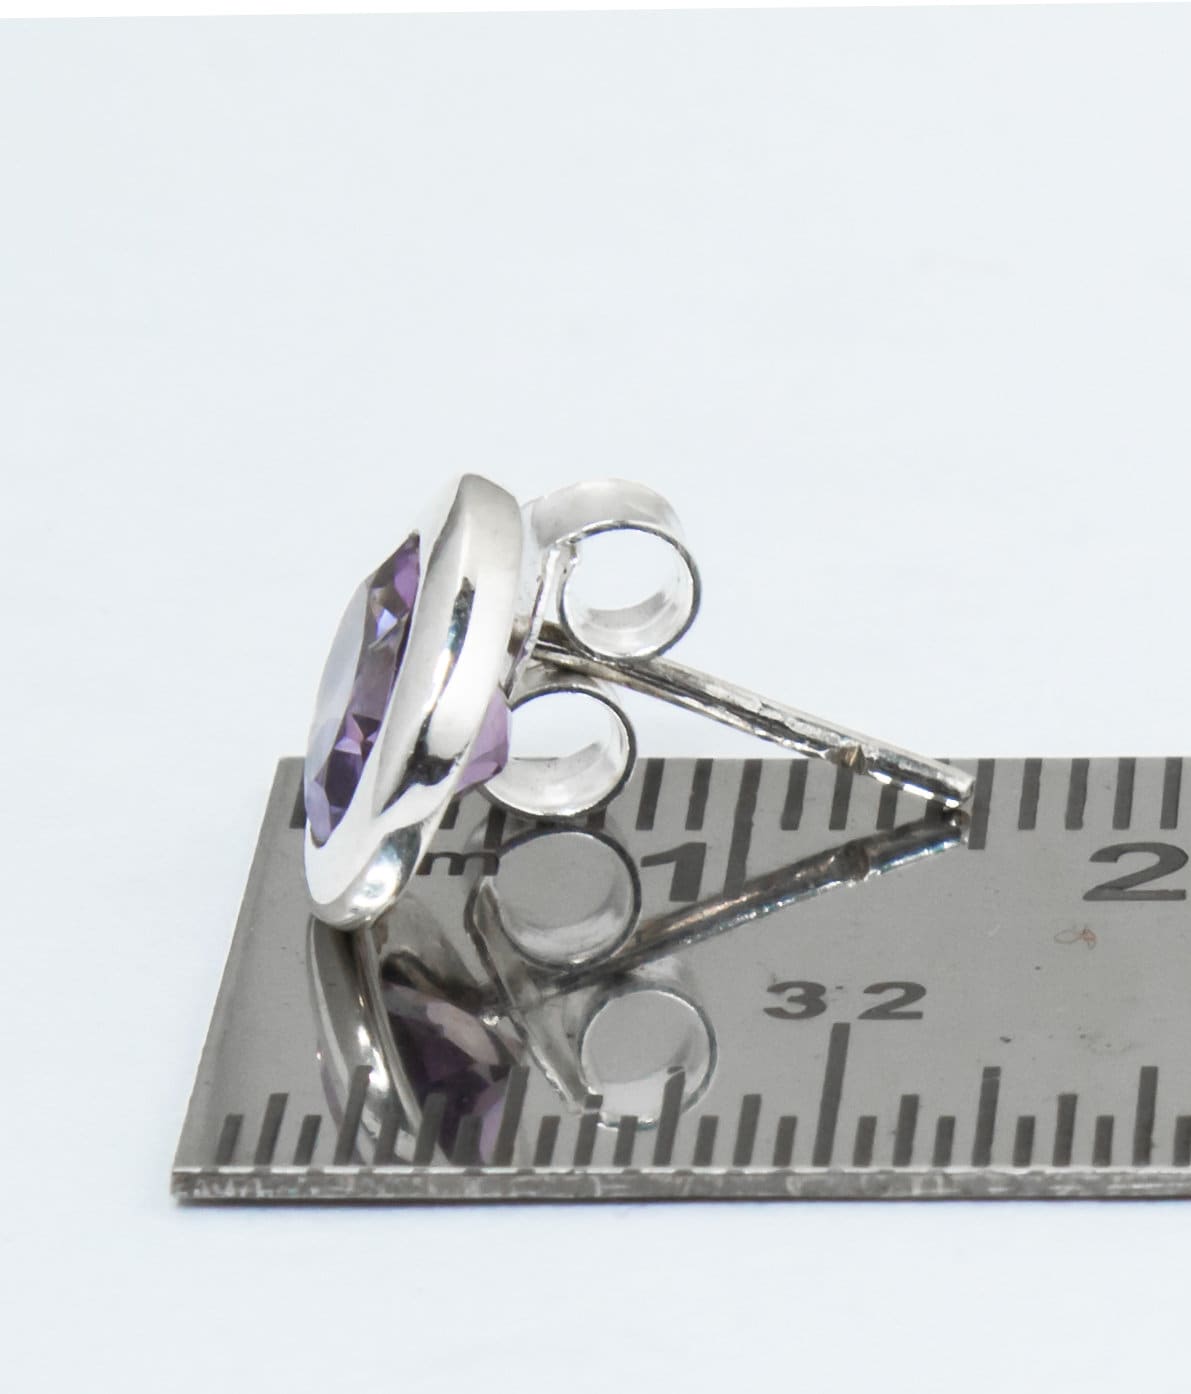 Oval AMETHYST Gemstone Solid 925 Sterling Silver Stud Earrings, Minimalistic Purple Stud Earrings, Aquarius Zodiac Birthstone, Australia, Zorbajewellers